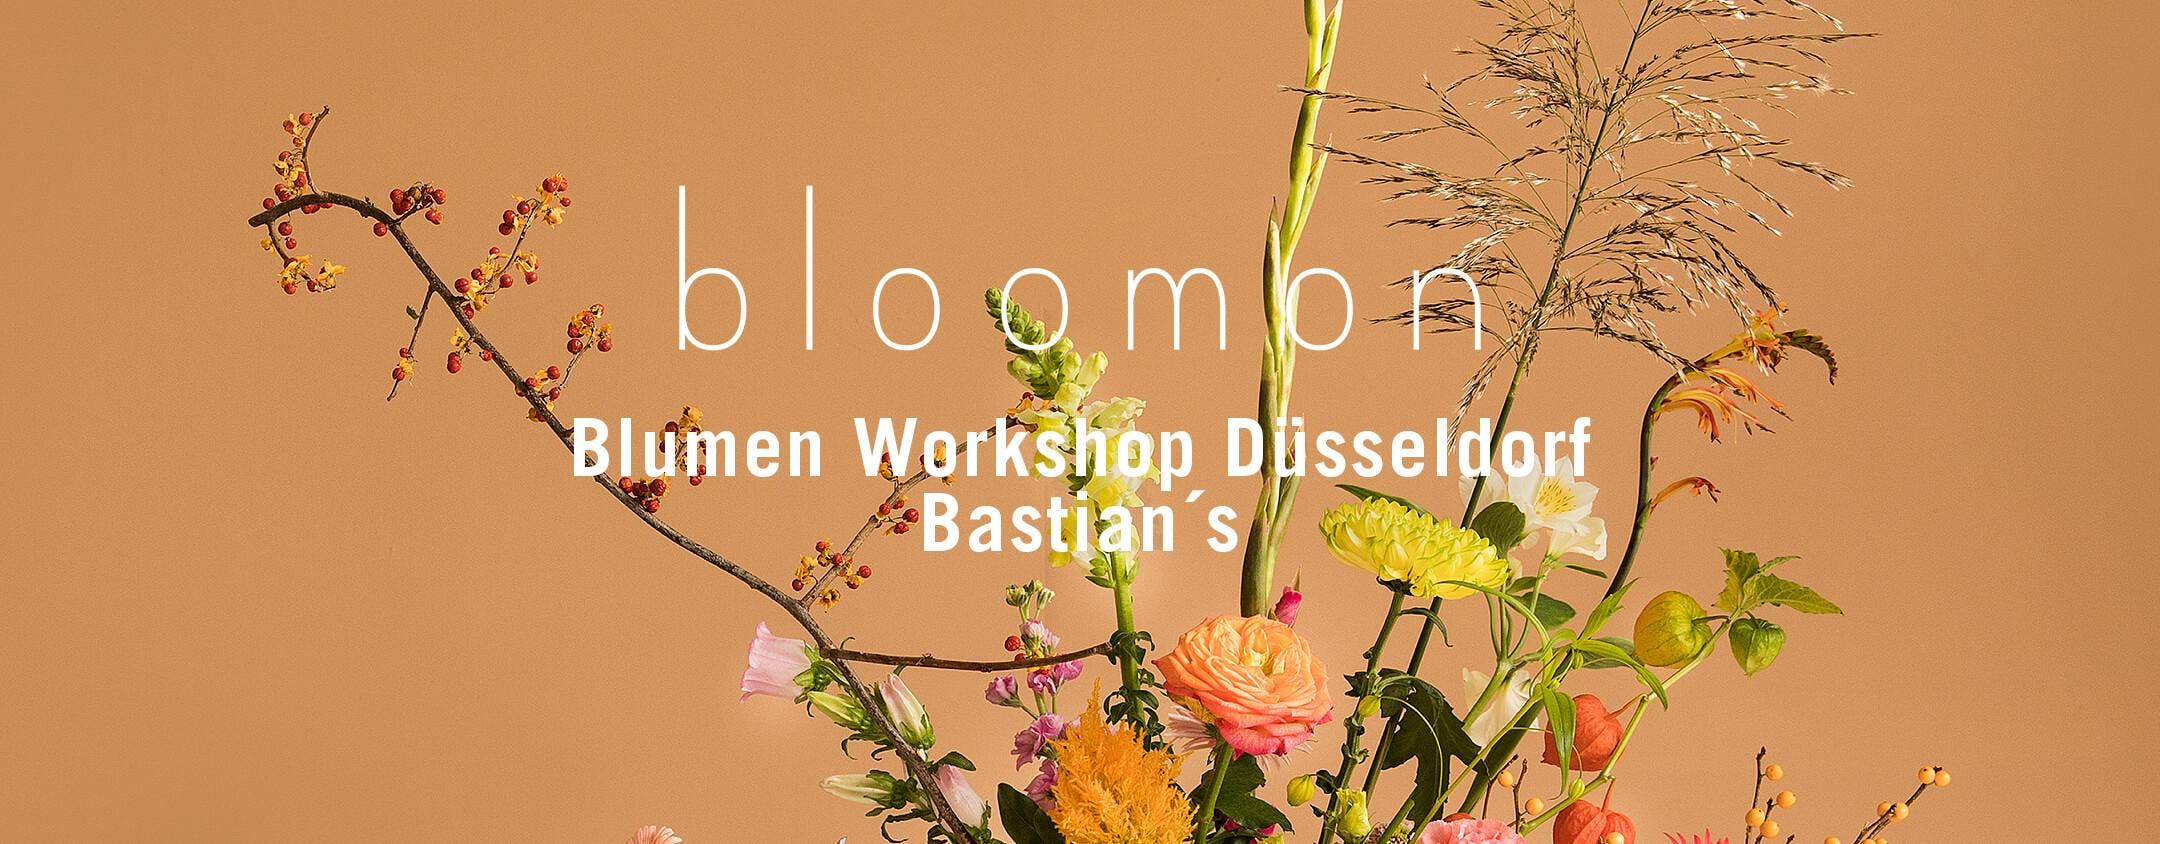 Bloomon Workshop 02 Mai Bastian Dusseldorf 02 05 19